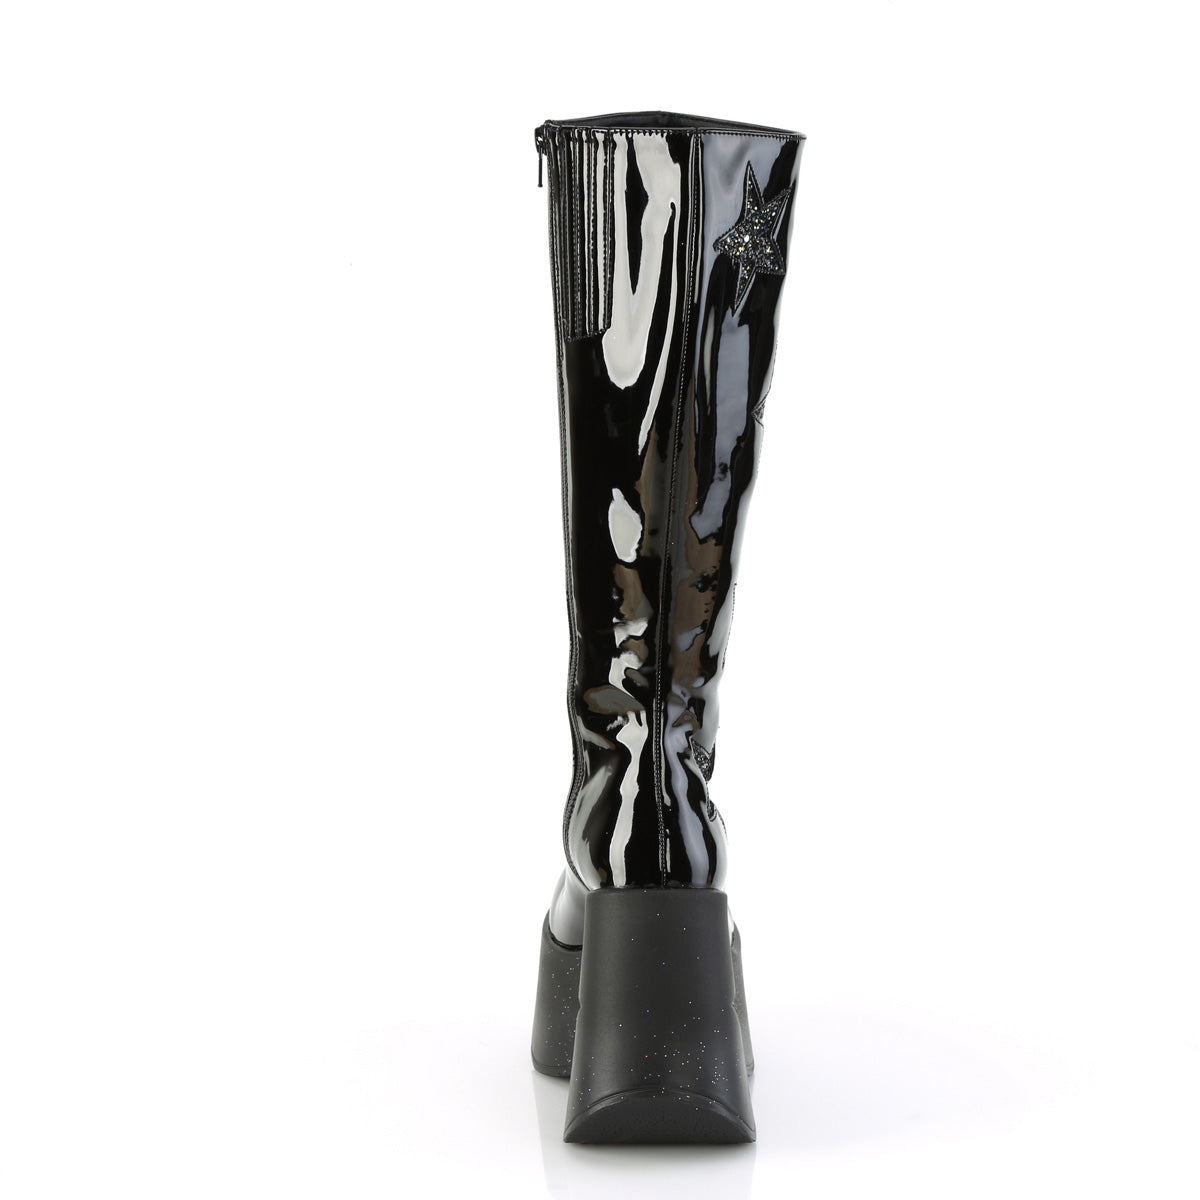 DYNAMITE-218 Demonia Black Patent-Black Multi Glitter Women's Mid-Calf & Knee High Boots [Demonia Cult Alternative Footwear]